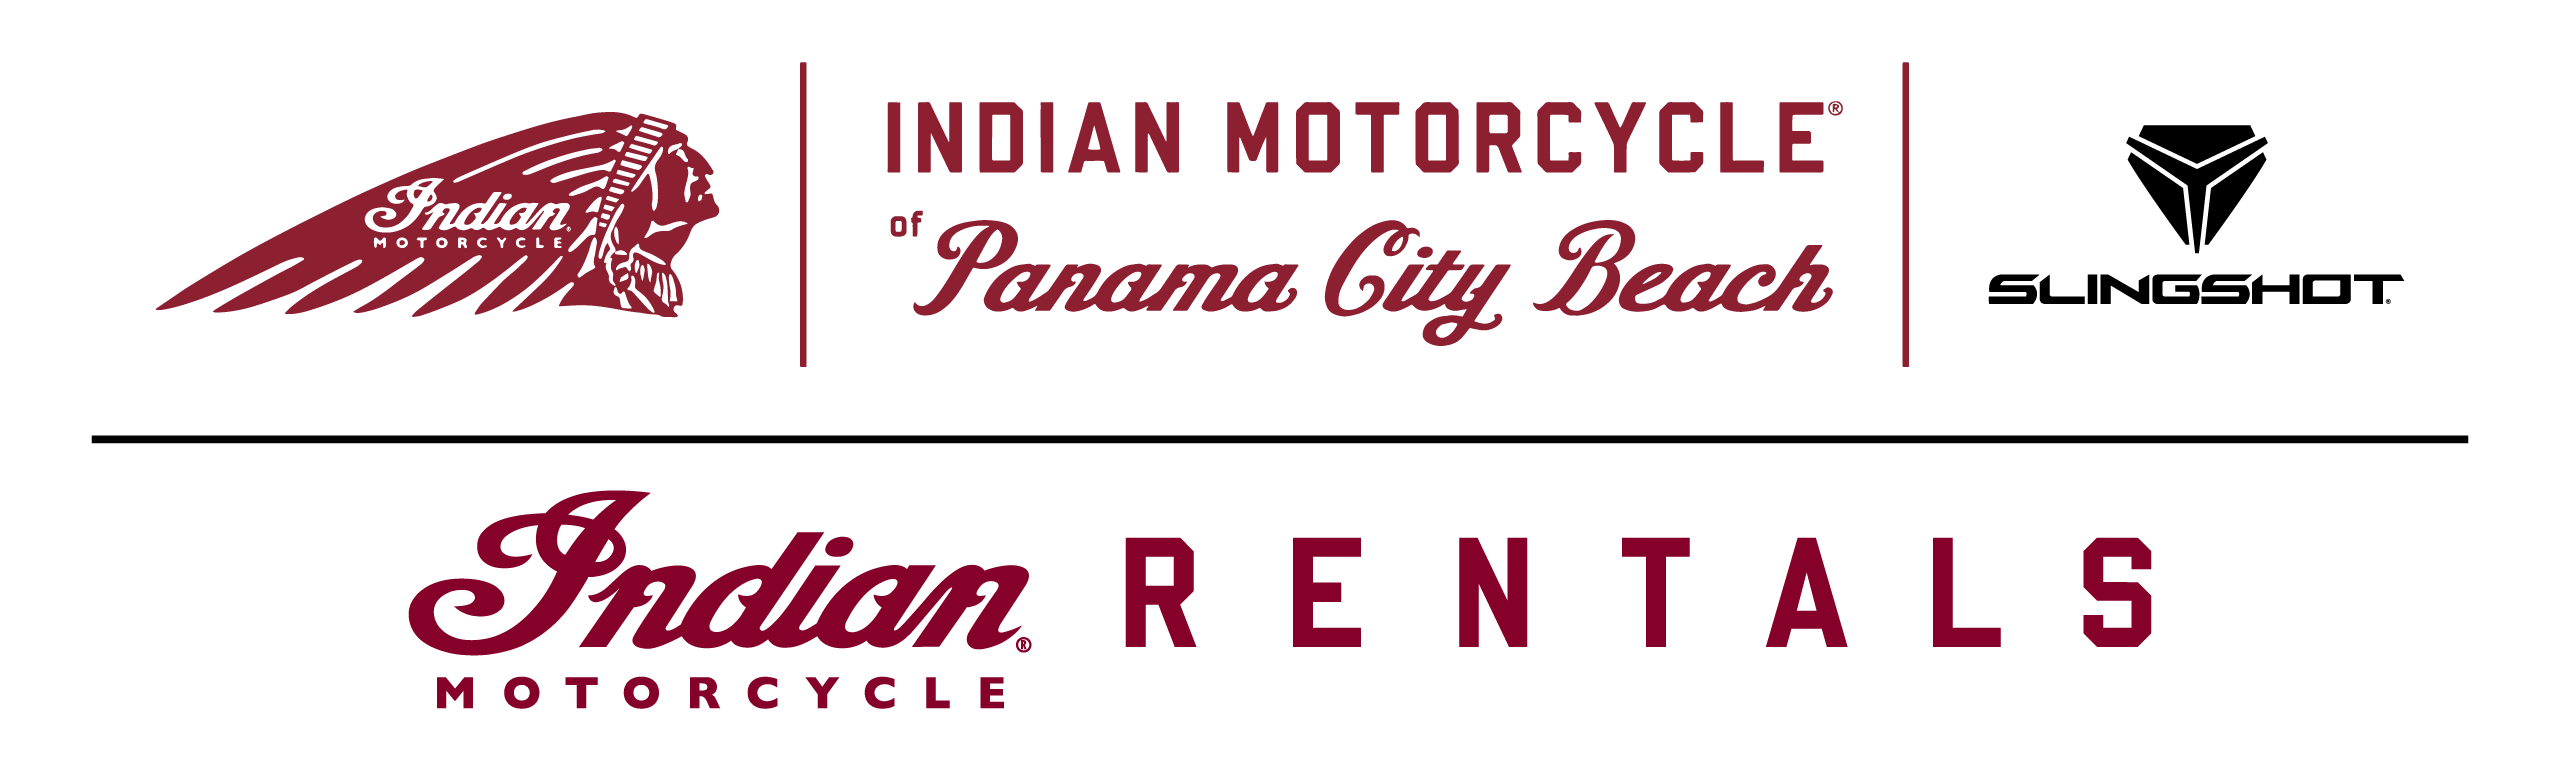 Indian Motorcycle of Panama City Beach located in Panama City Beach, FL.